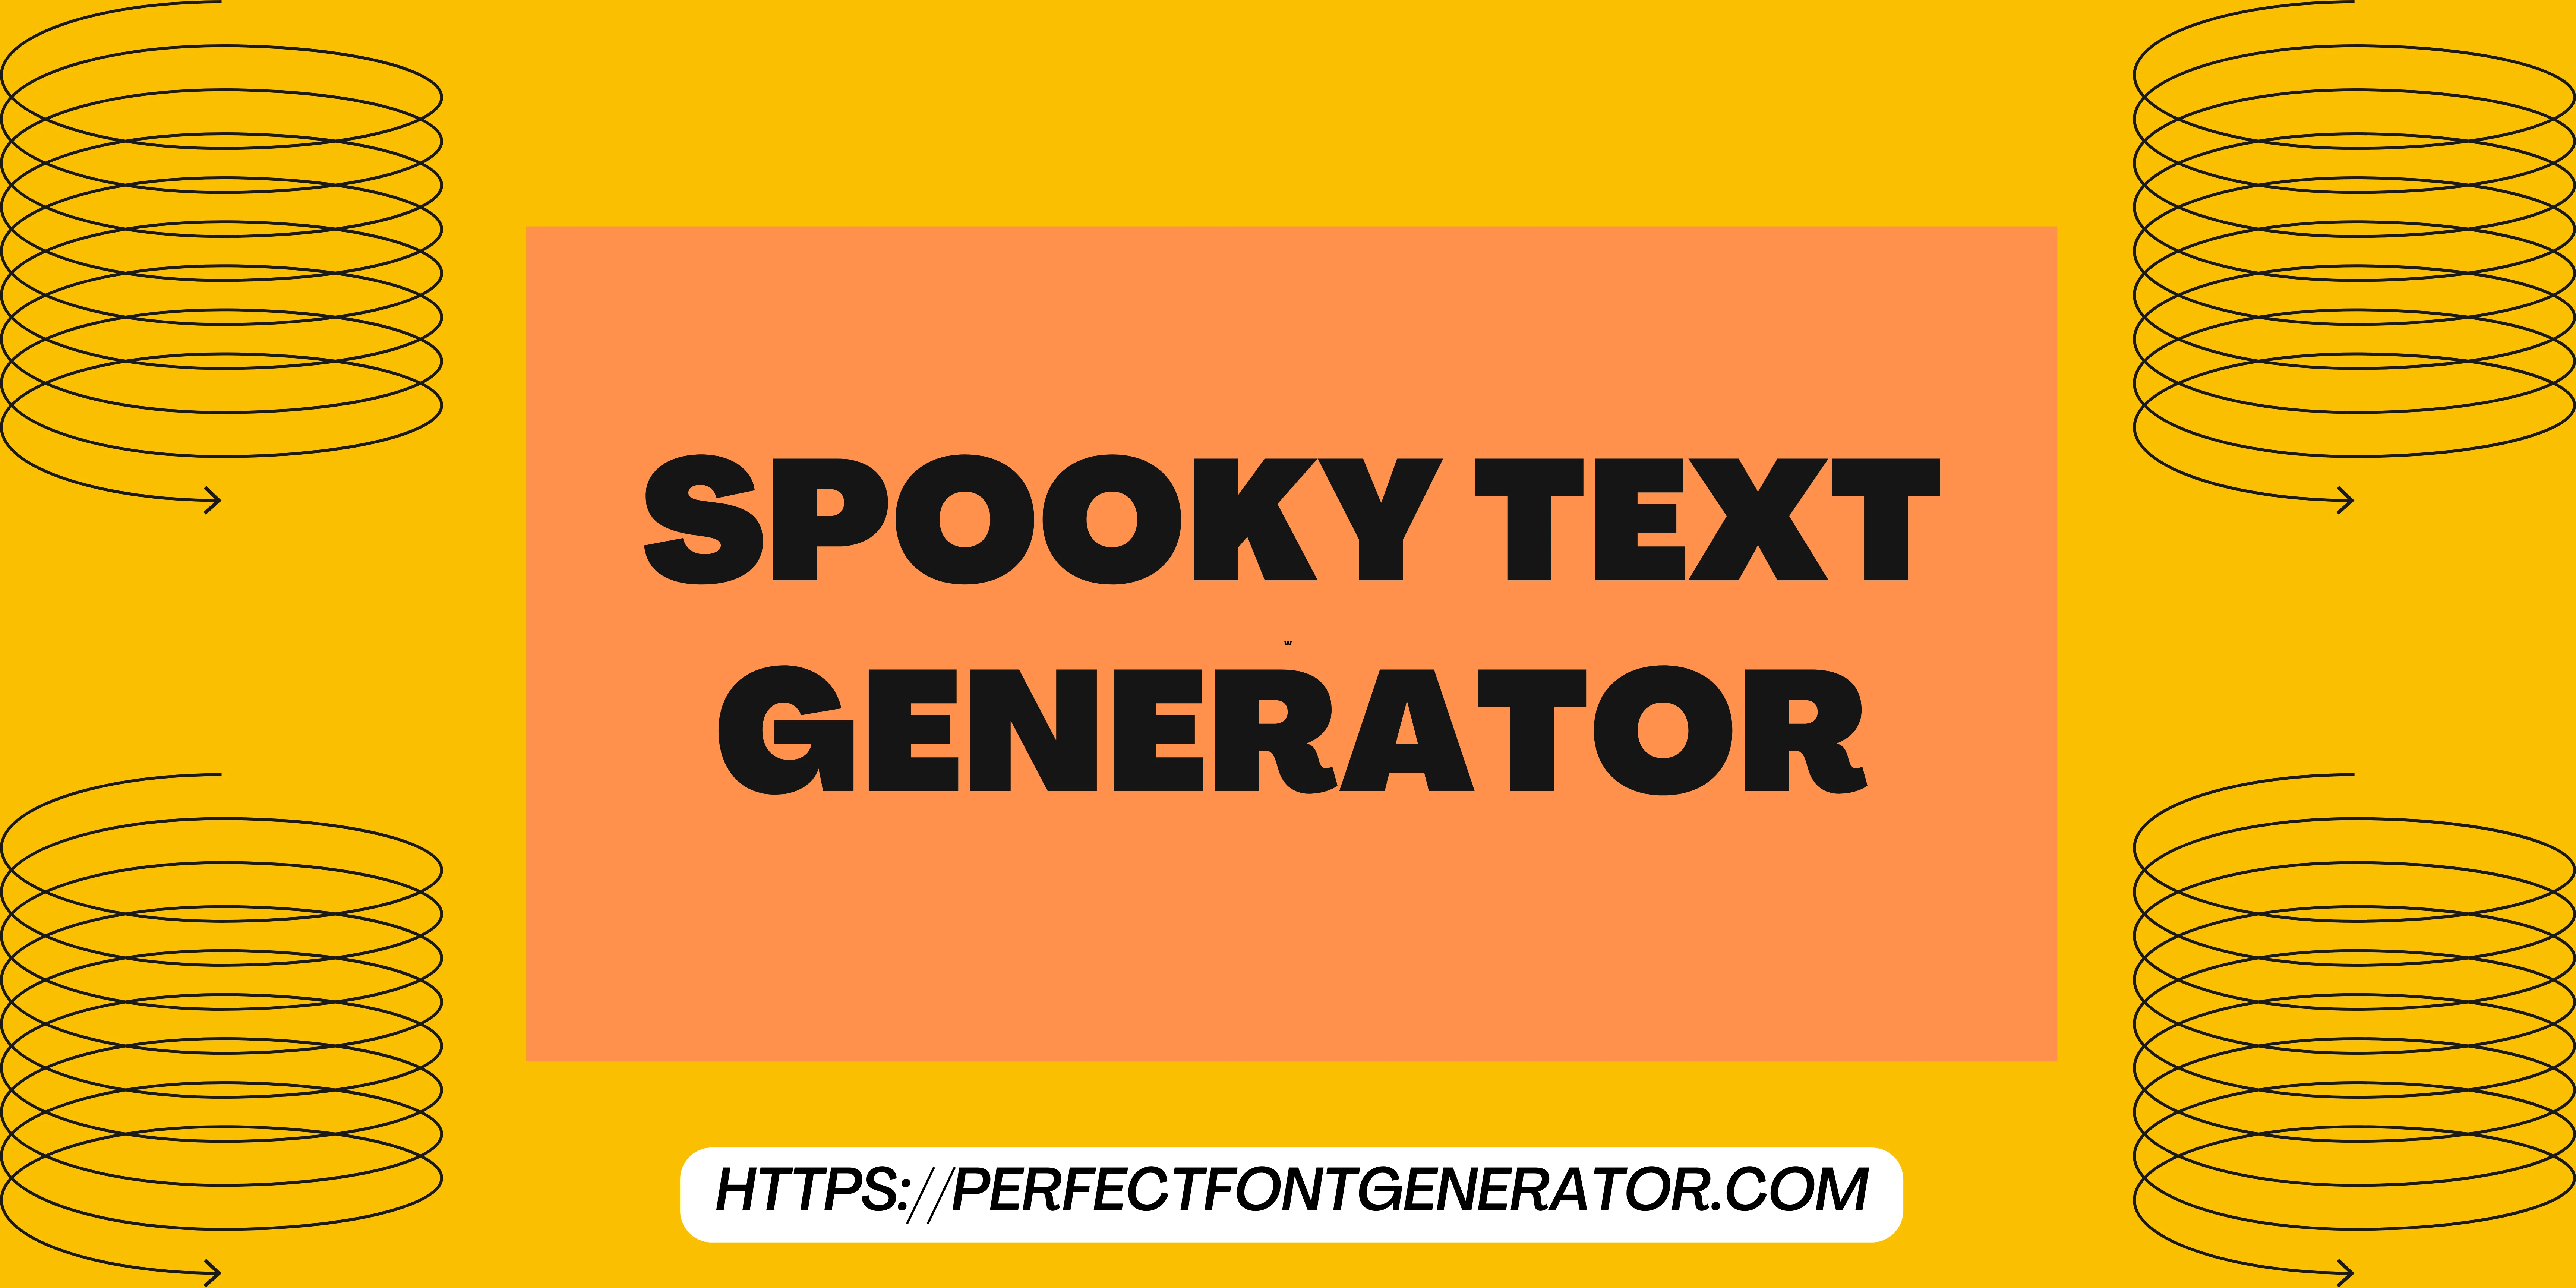 spooky text generator